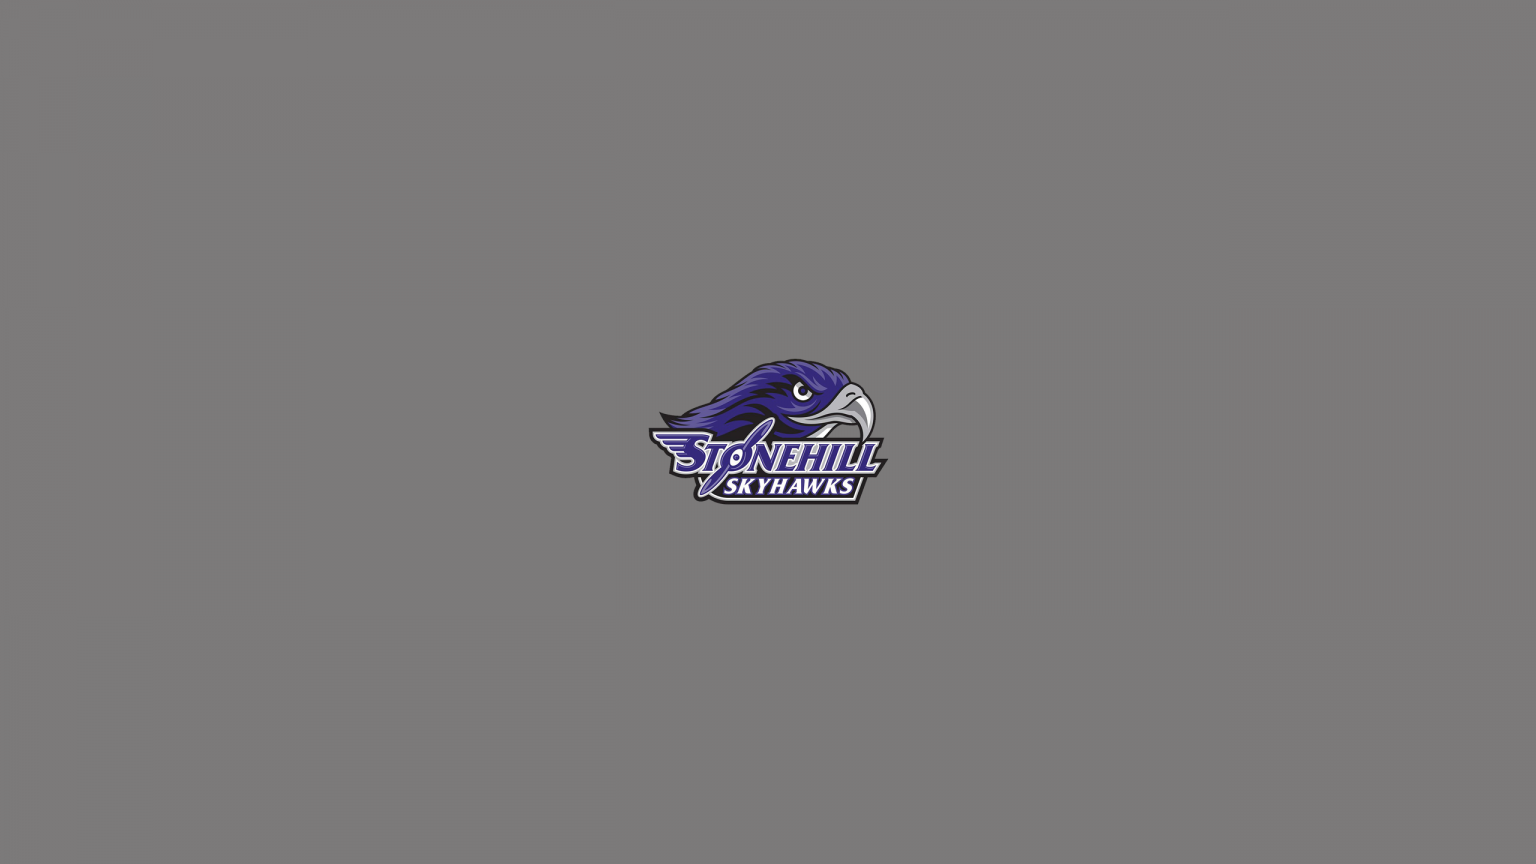 Stonehill Skyhawks Basketball - NCAAB - Square Bettor